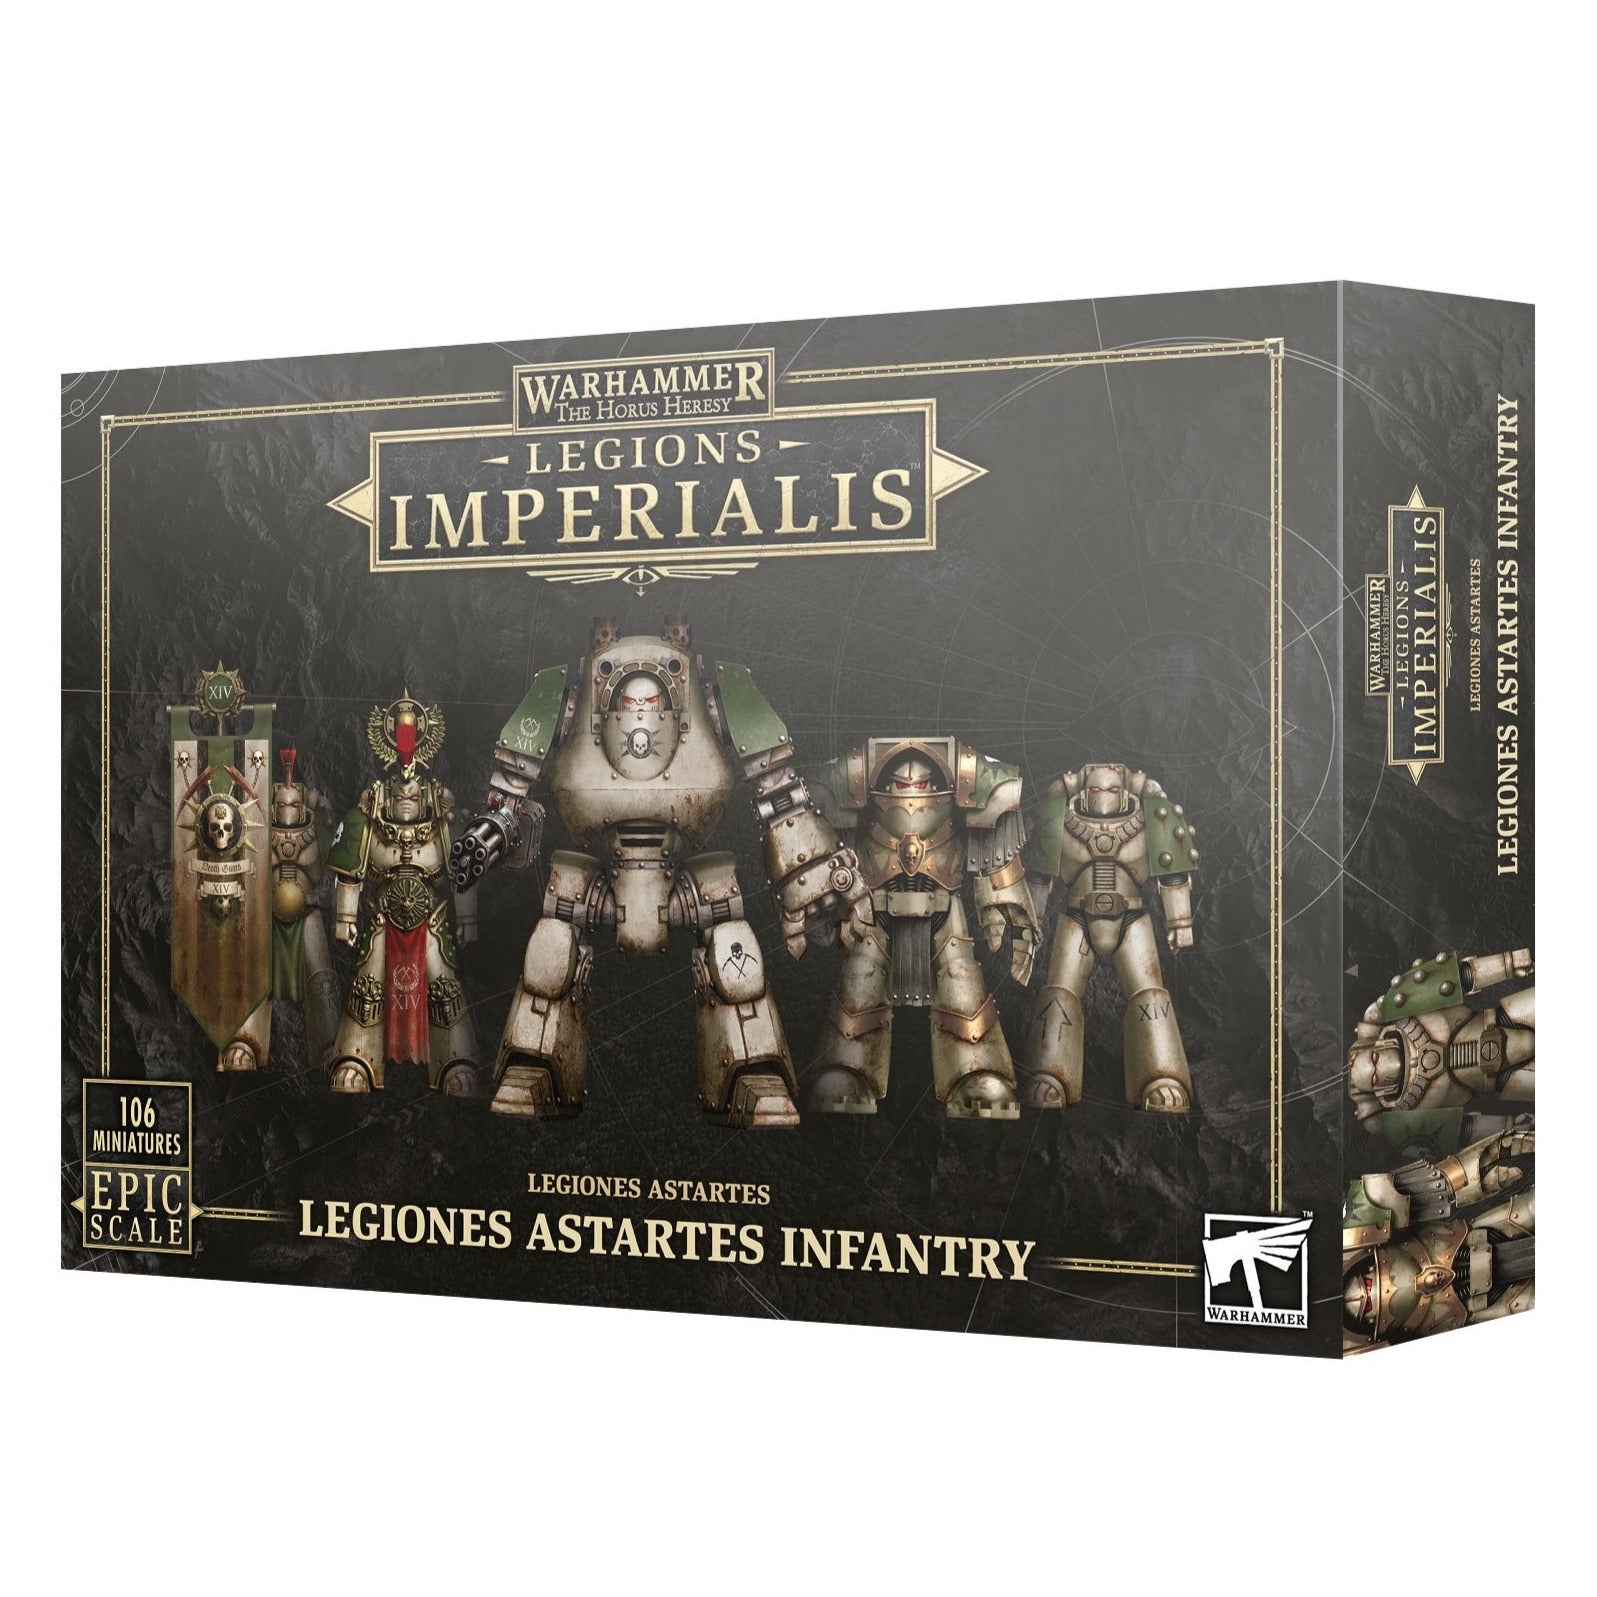 Legions Imperialis: Legiones Astartes Infantry - Release Date 2/12/23 - Loaded Dice Barry Vale of Glamorgan CF64 3HD